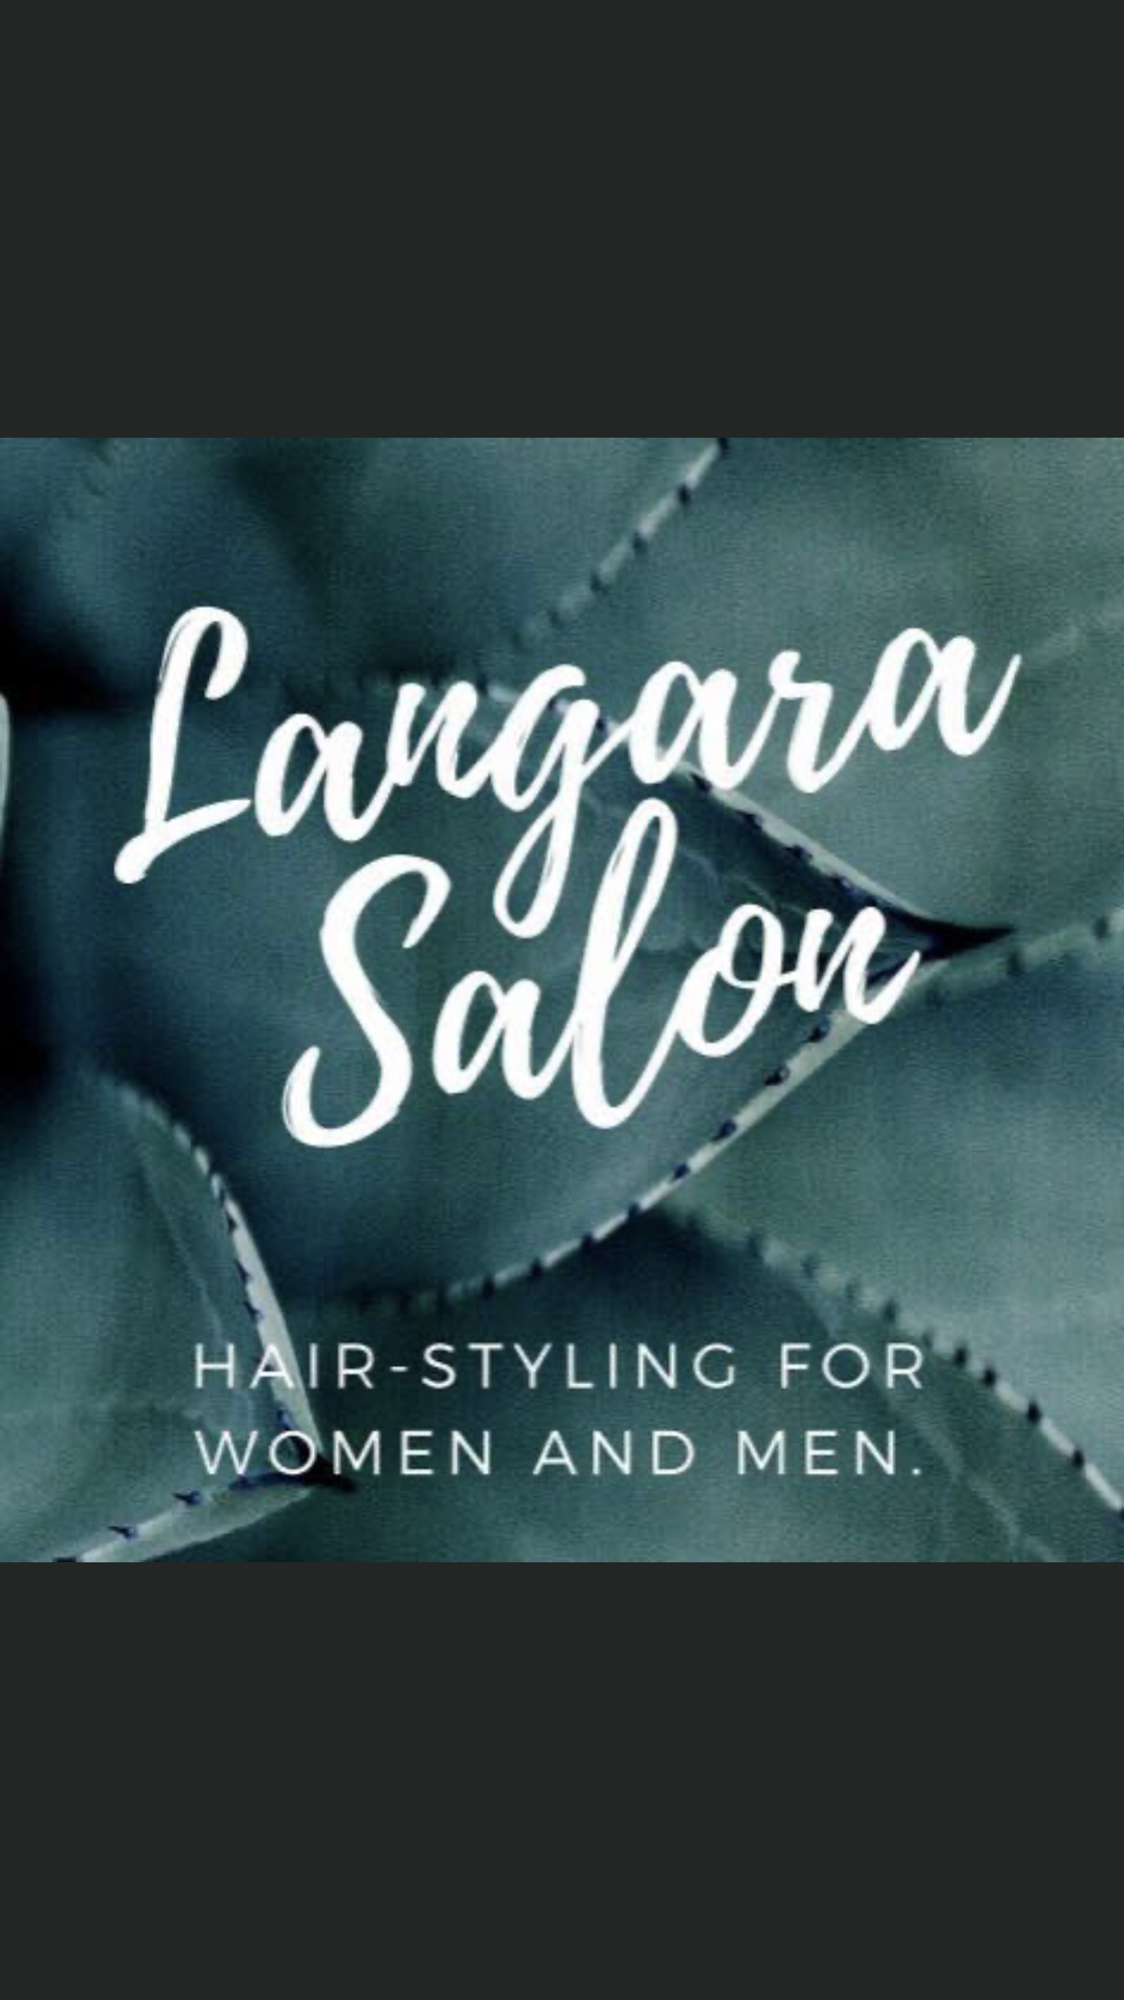 Langara Salon & Nail Spa